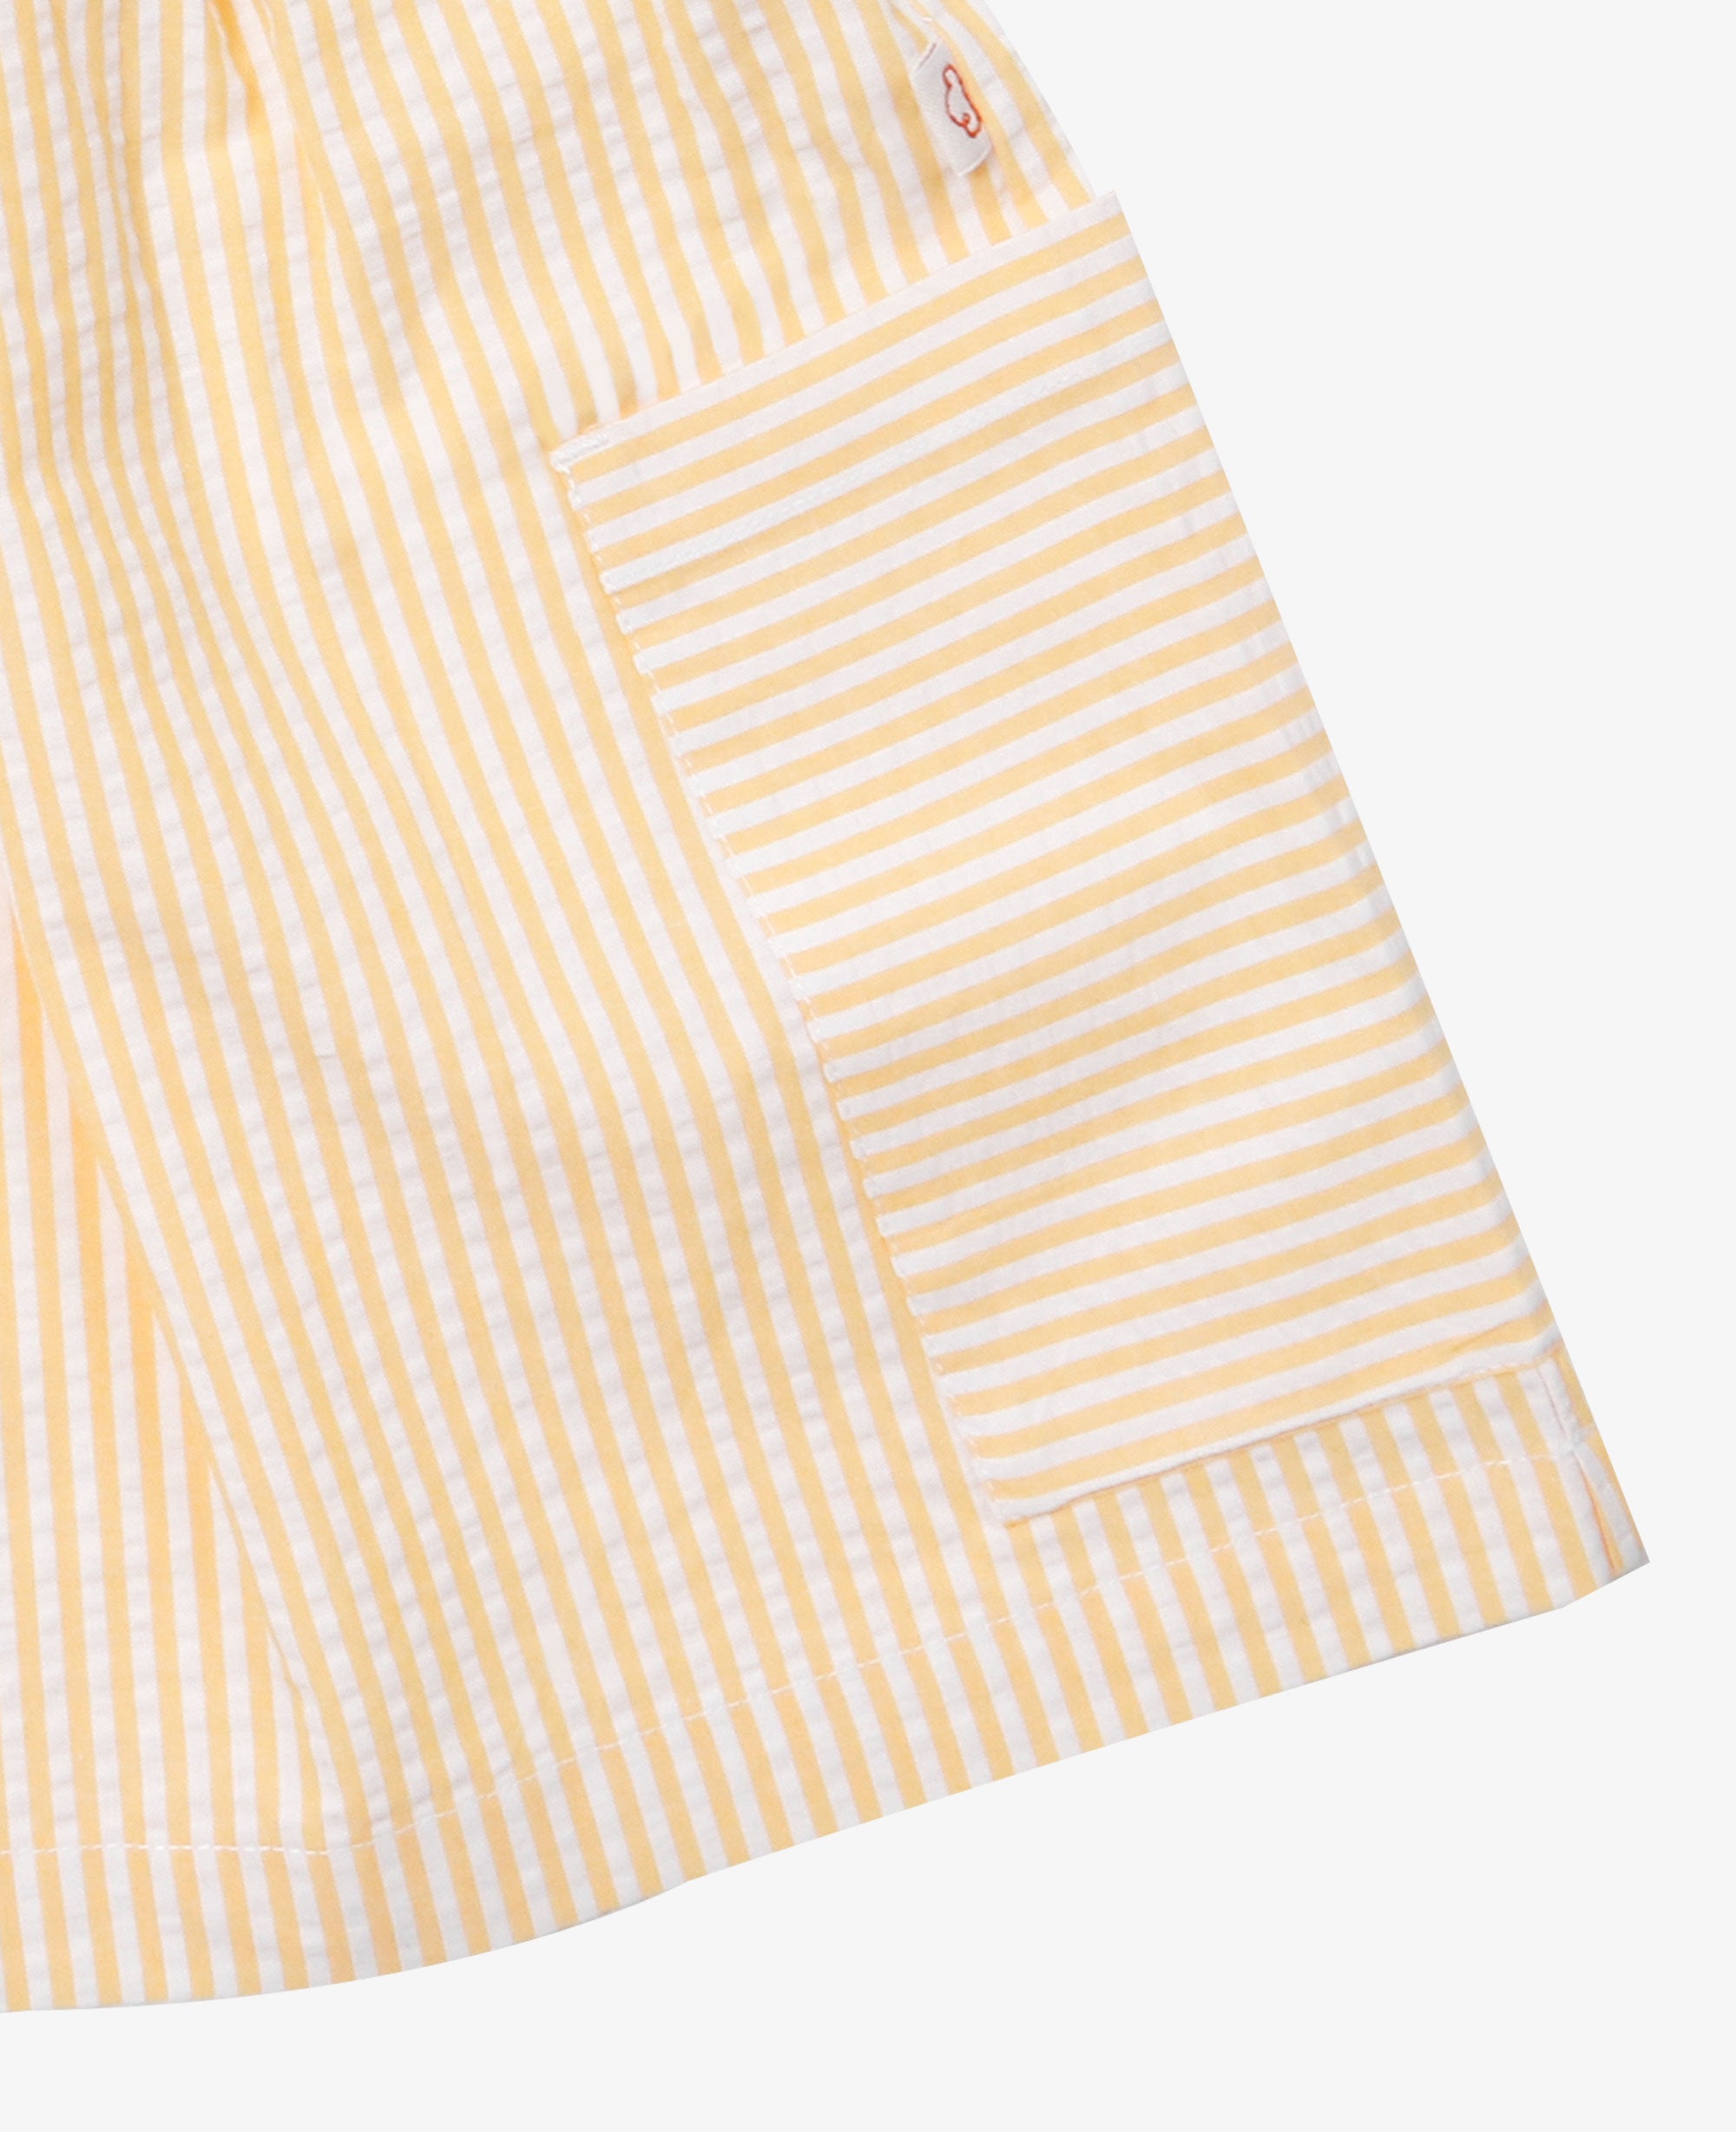 Seersucker Cotton Dress - Sunny Stripe